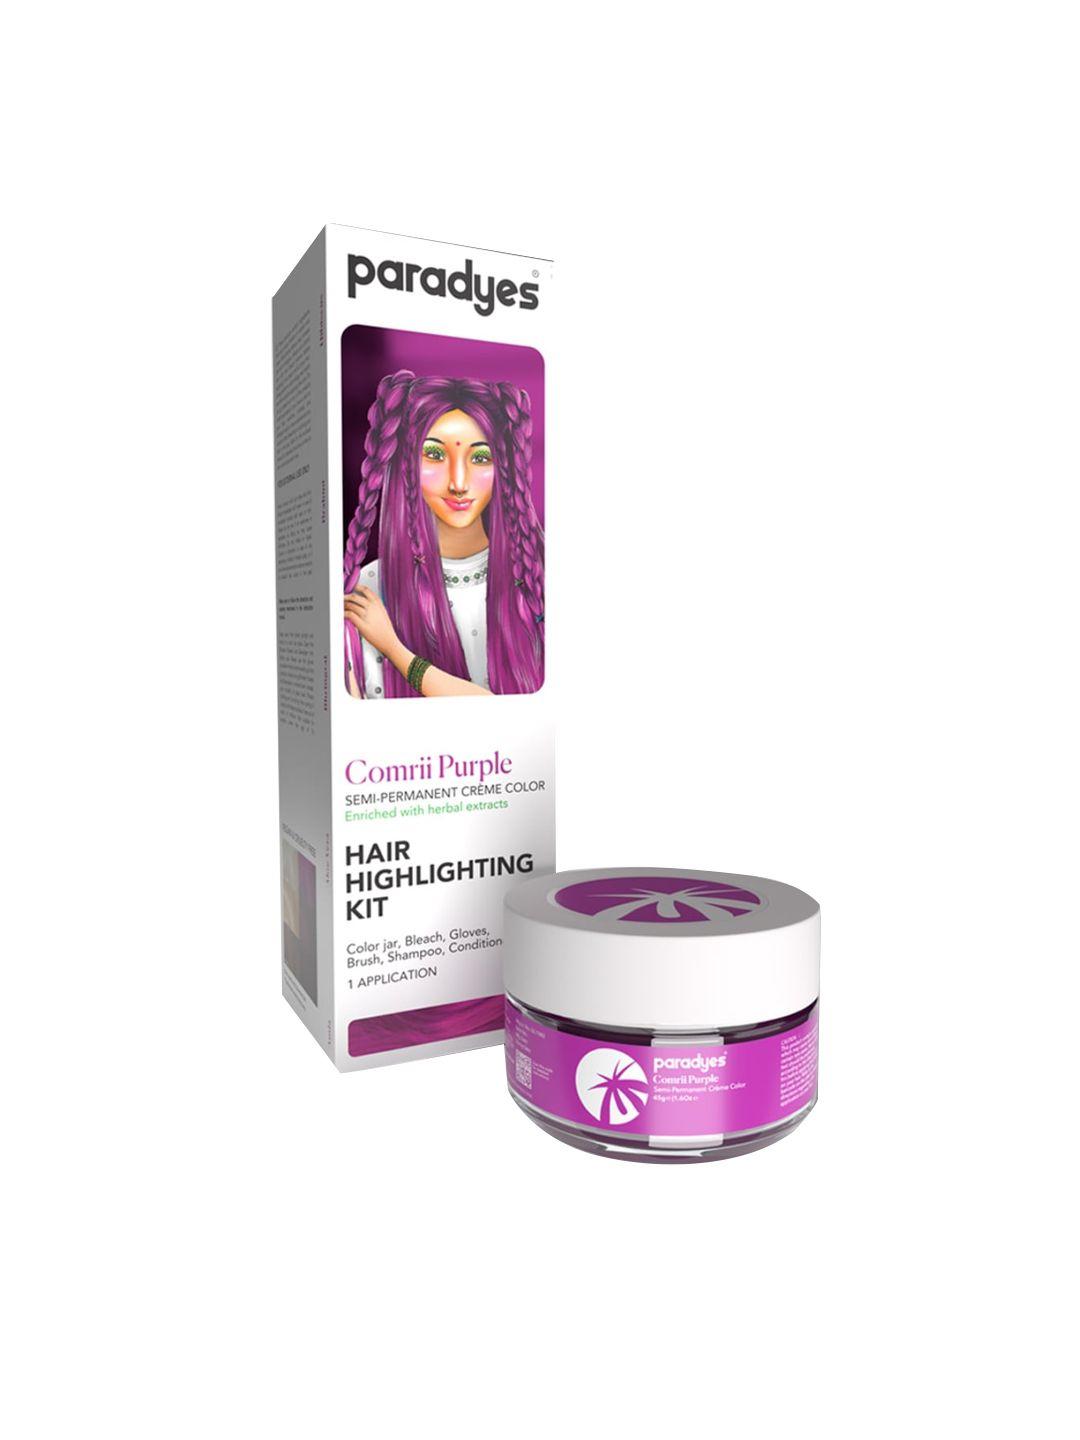 paradyes ammonia free semi-permanent hair color highlighting kit 100 g - comrii purple